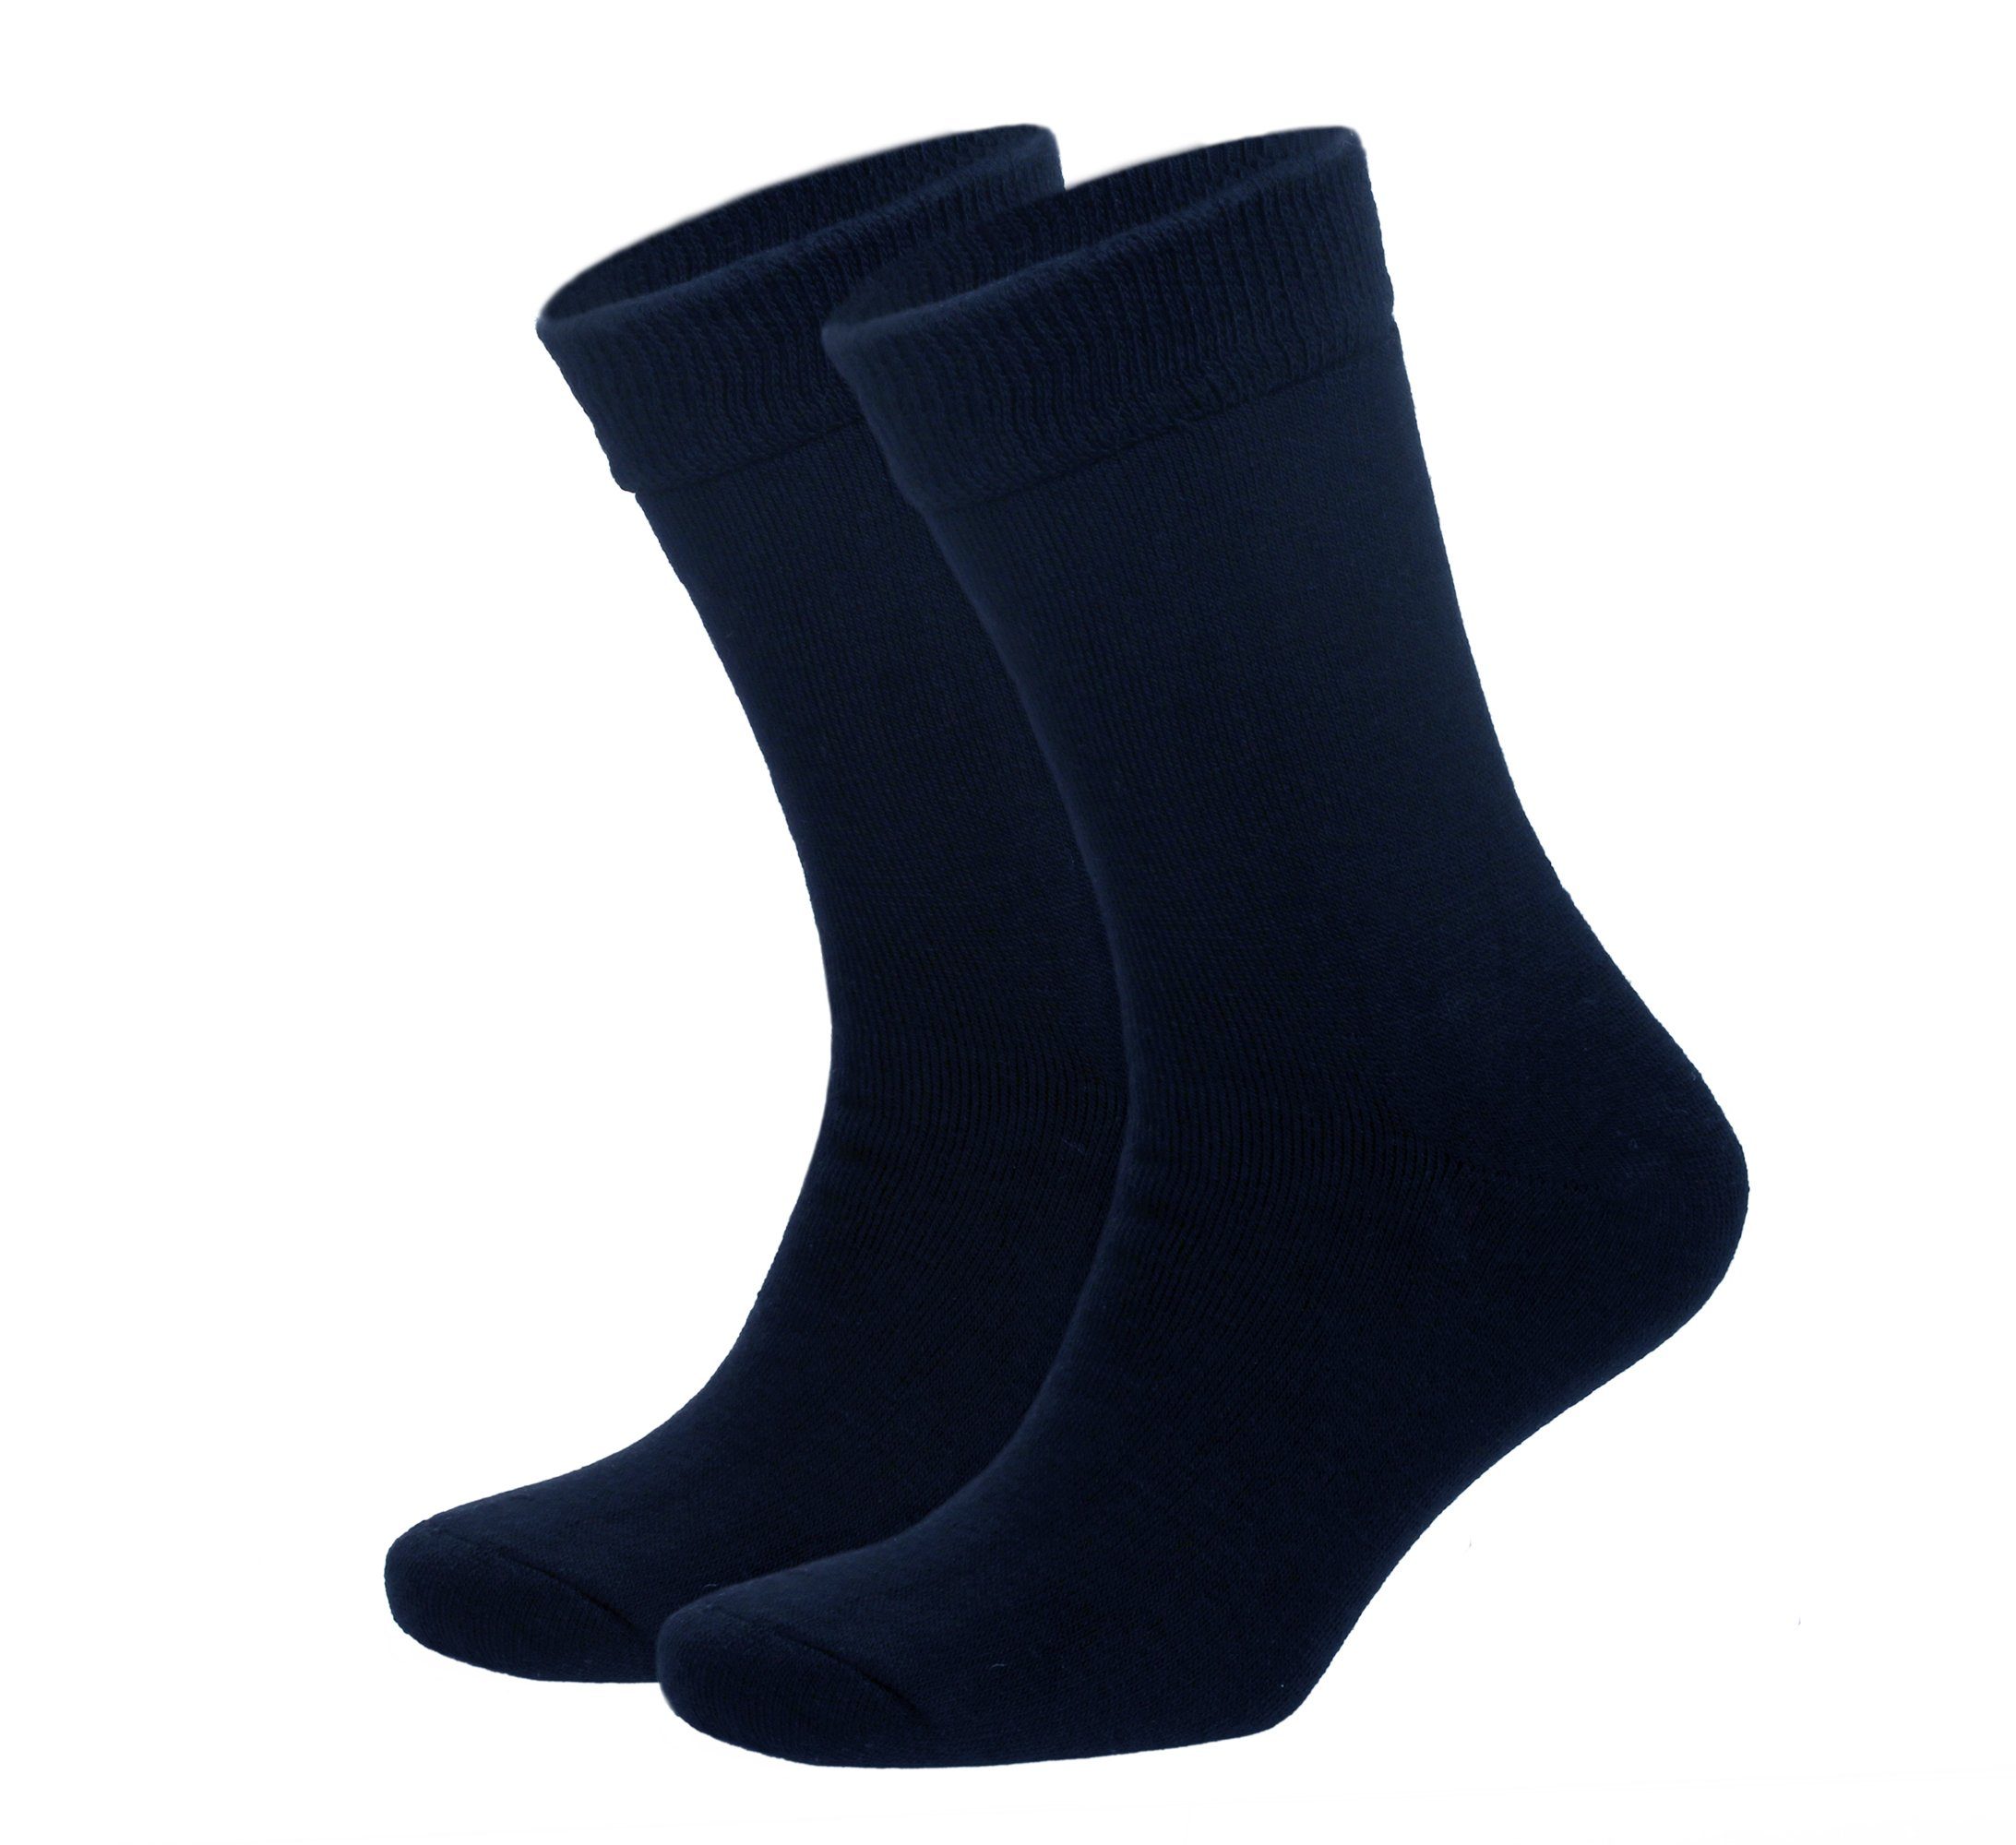 NoblesBox Thermosocken Herren Wintersocken (Beutel, 2-Paar, 41-46 EU Größe) Herren Warme Socken, Herren Arbeitssocken Blau